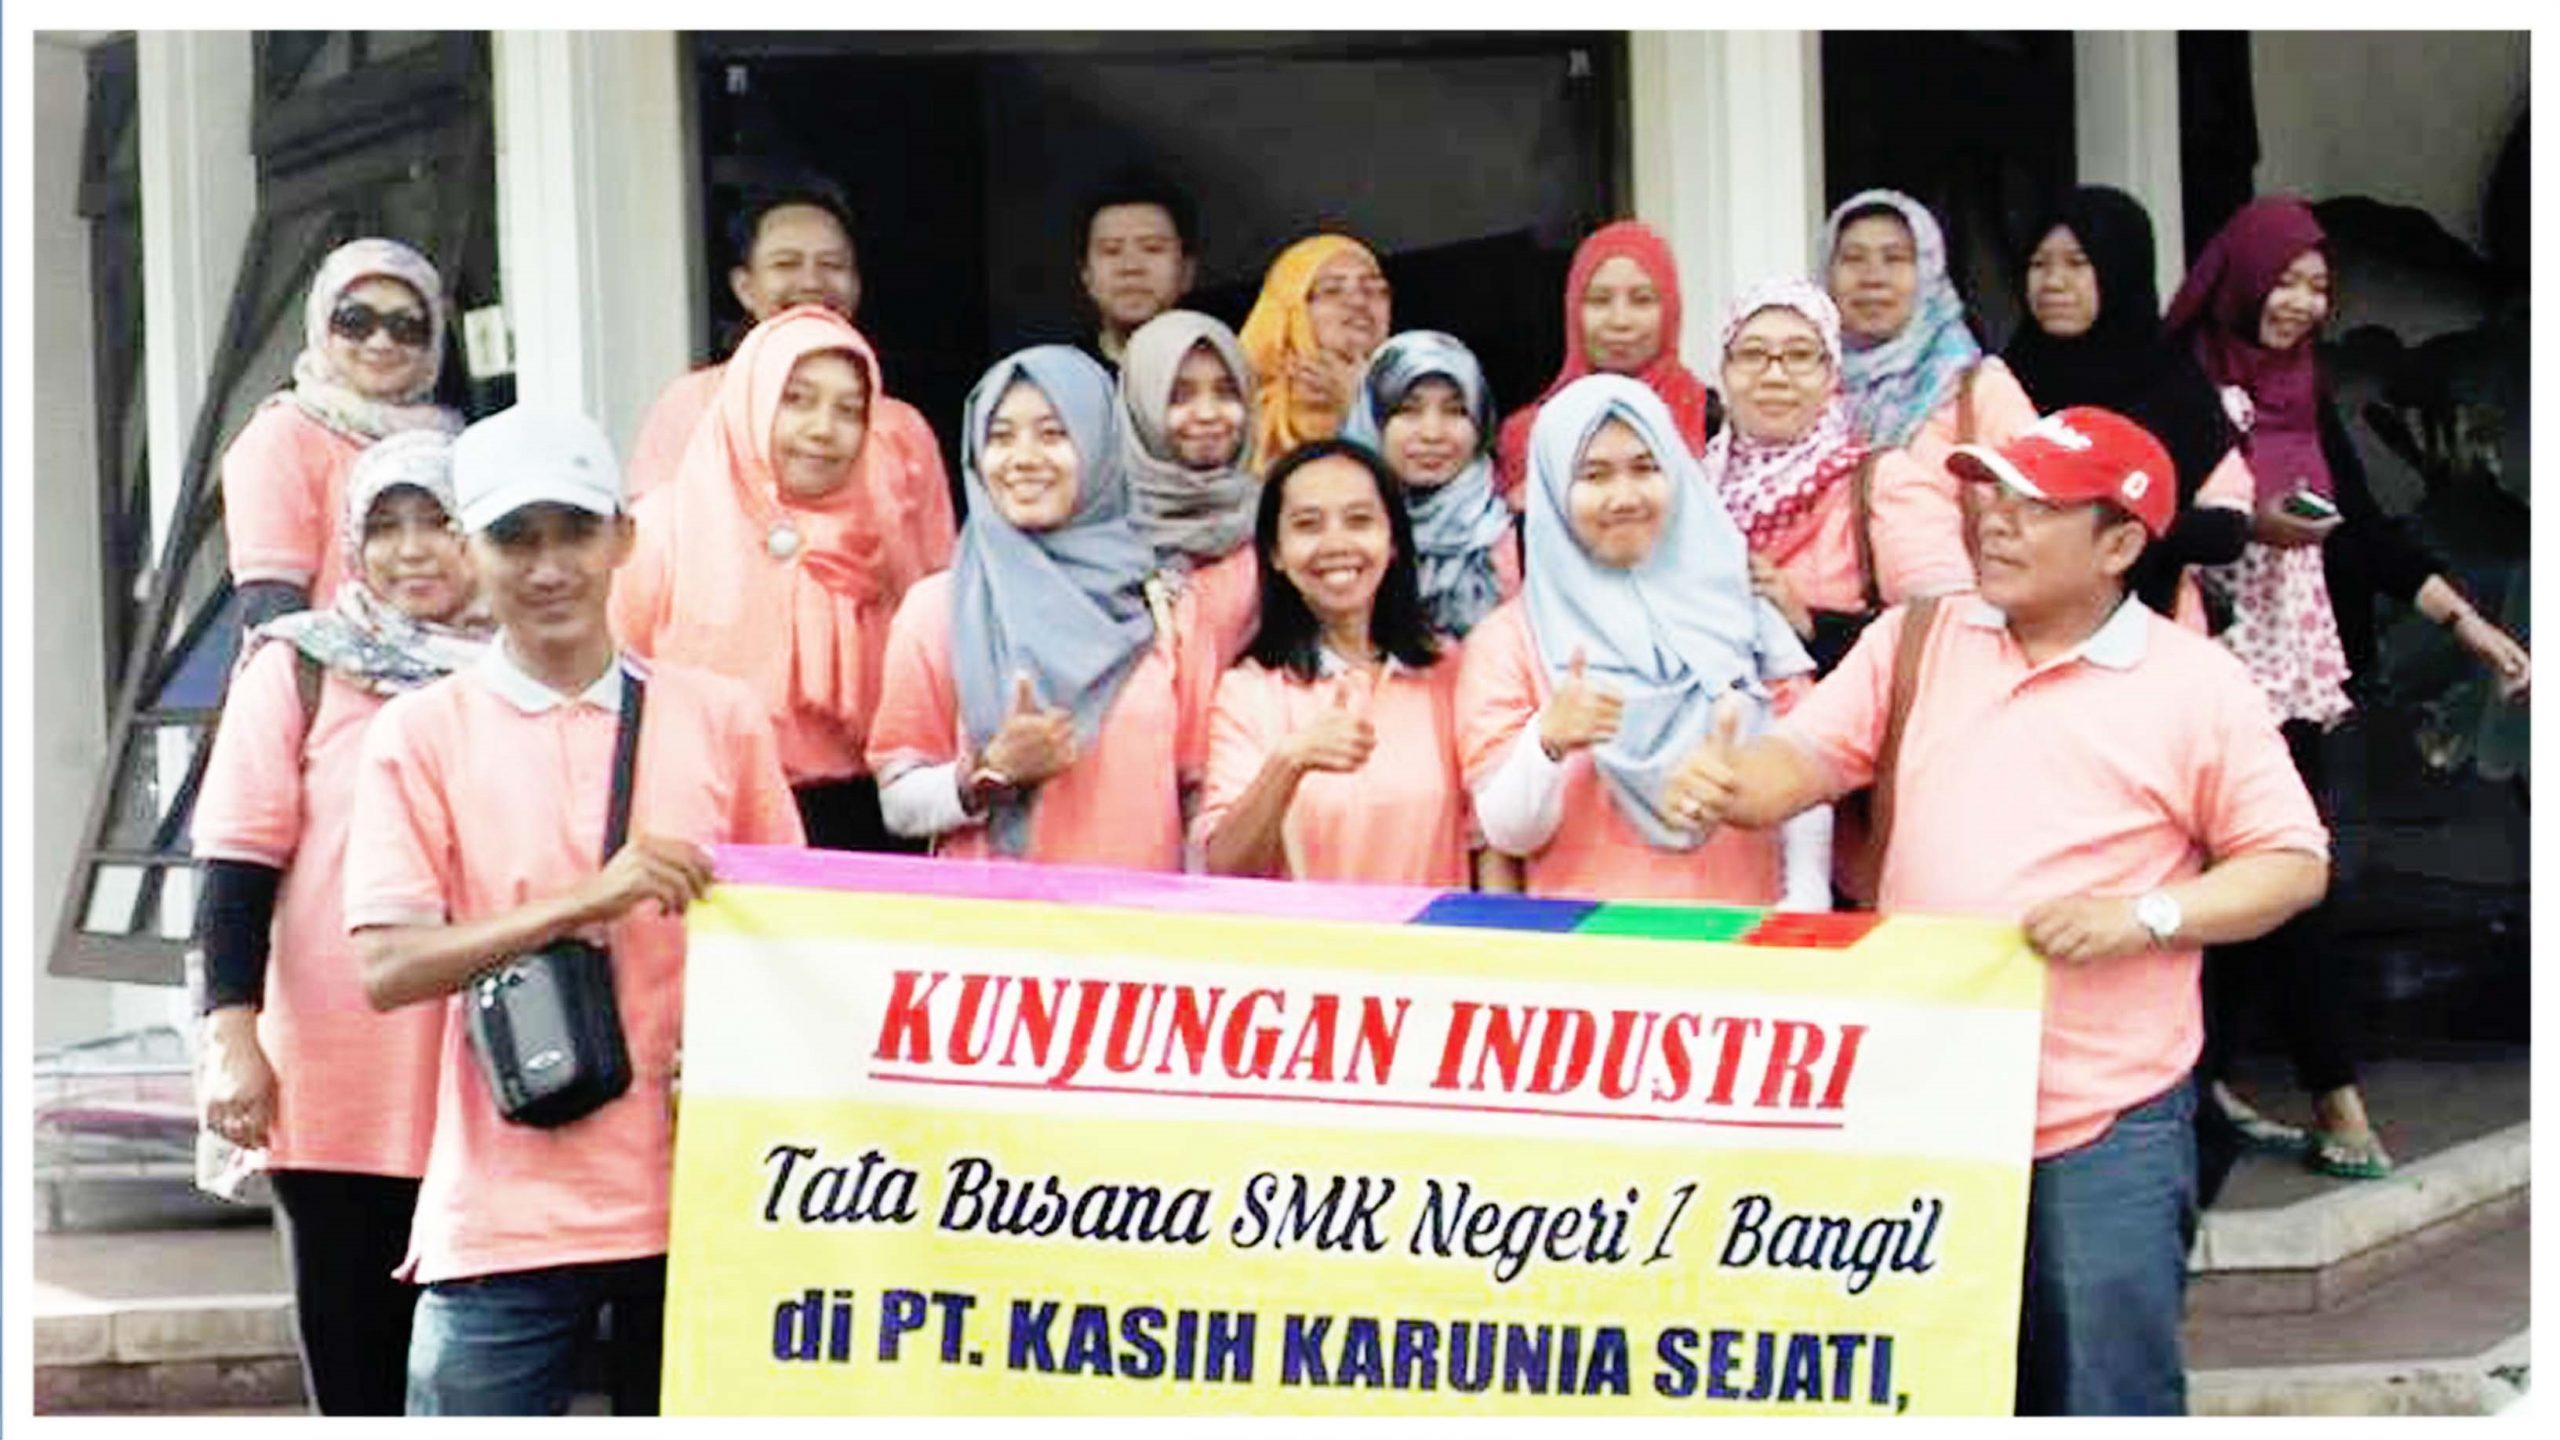 Kunjungan Industri Tata Busana SMK Negeri 1 Bangil ke Emba Jeans Malang